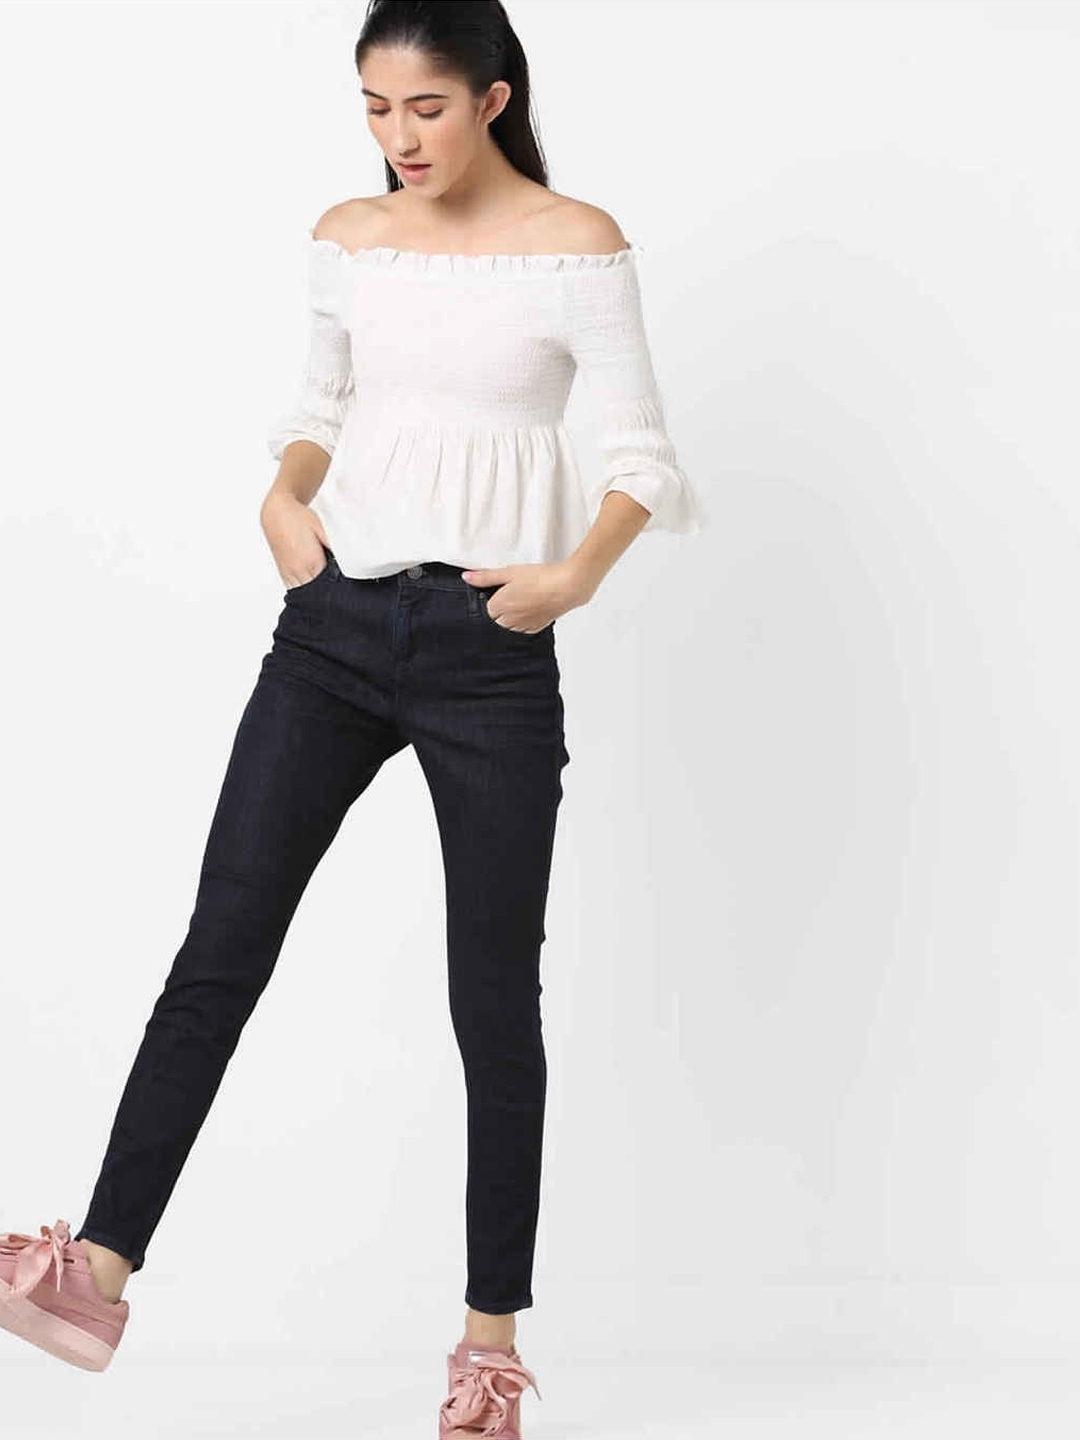 Women's skinny fit Star jeans